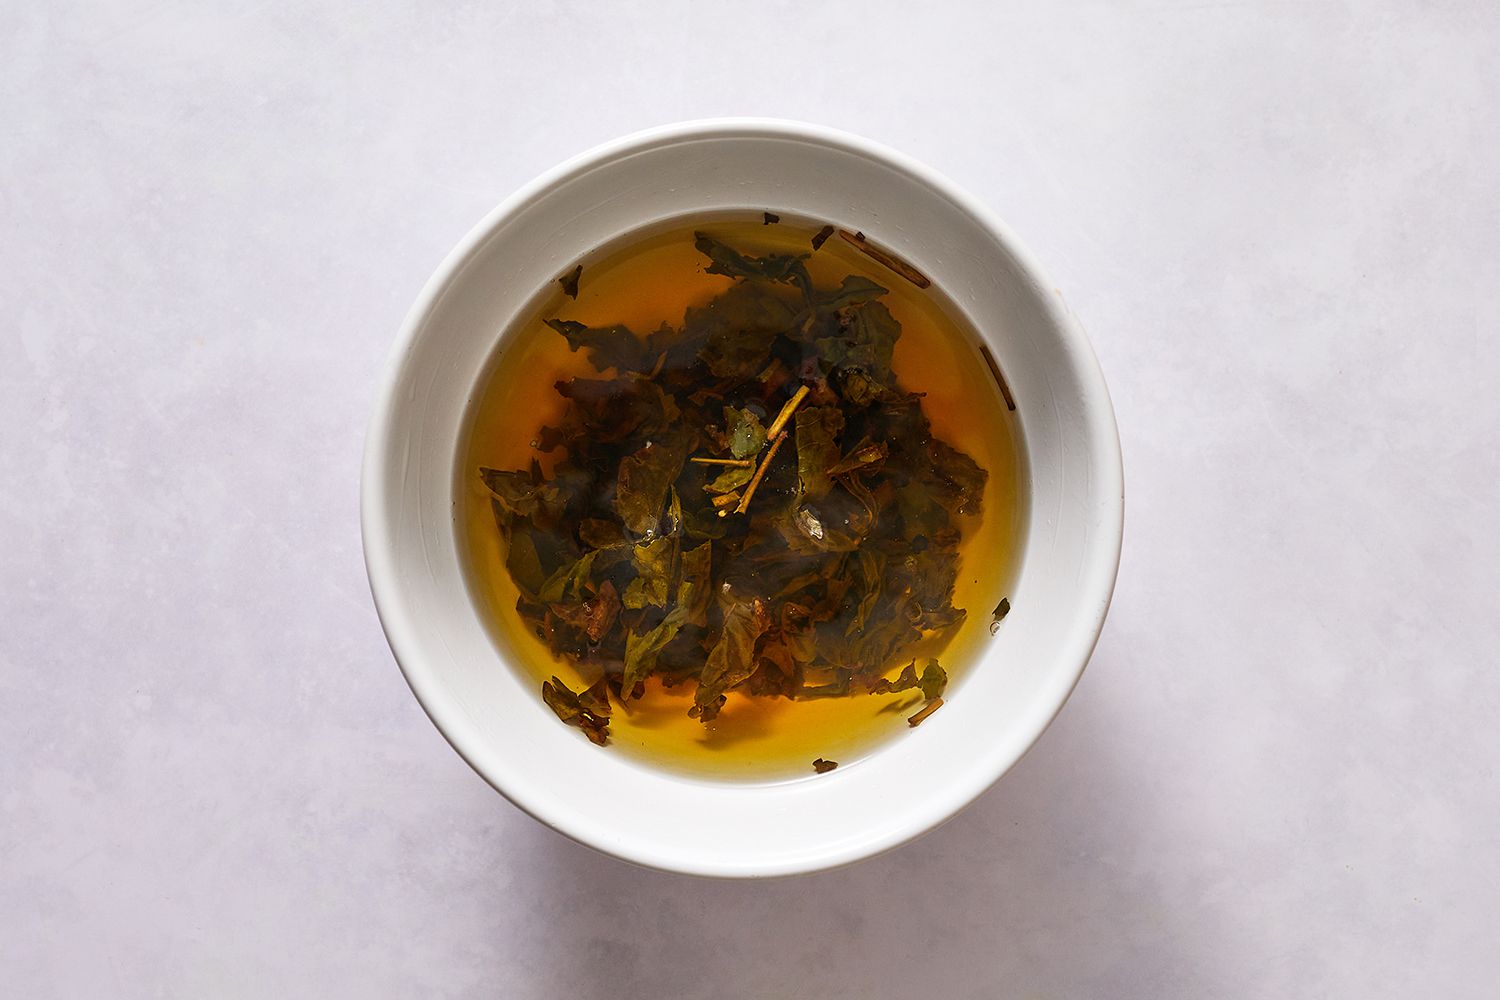 Oolong tea leaves seeping in a bowl of hot water